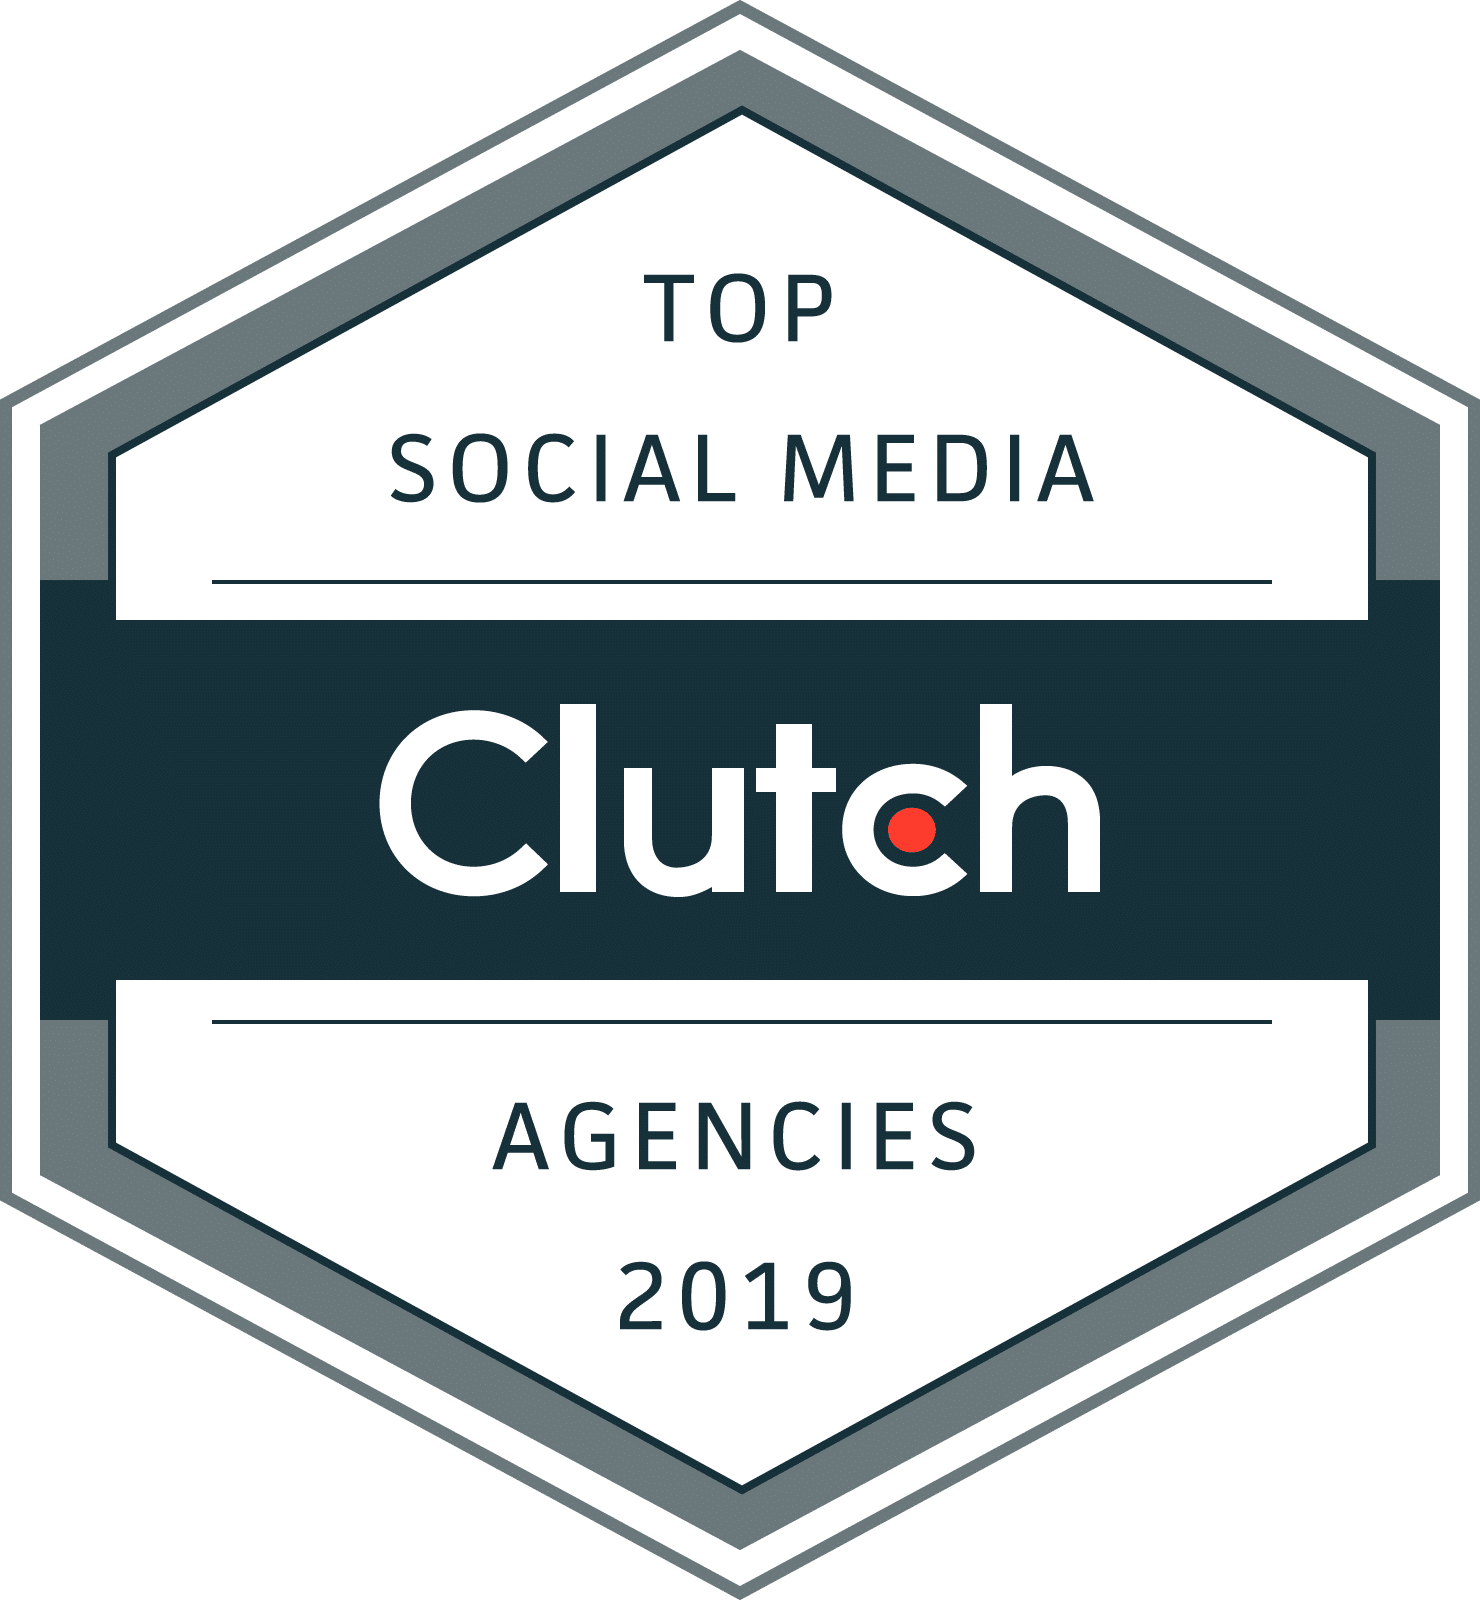 Top-Social-Media-Companies-2019-by-Clutch